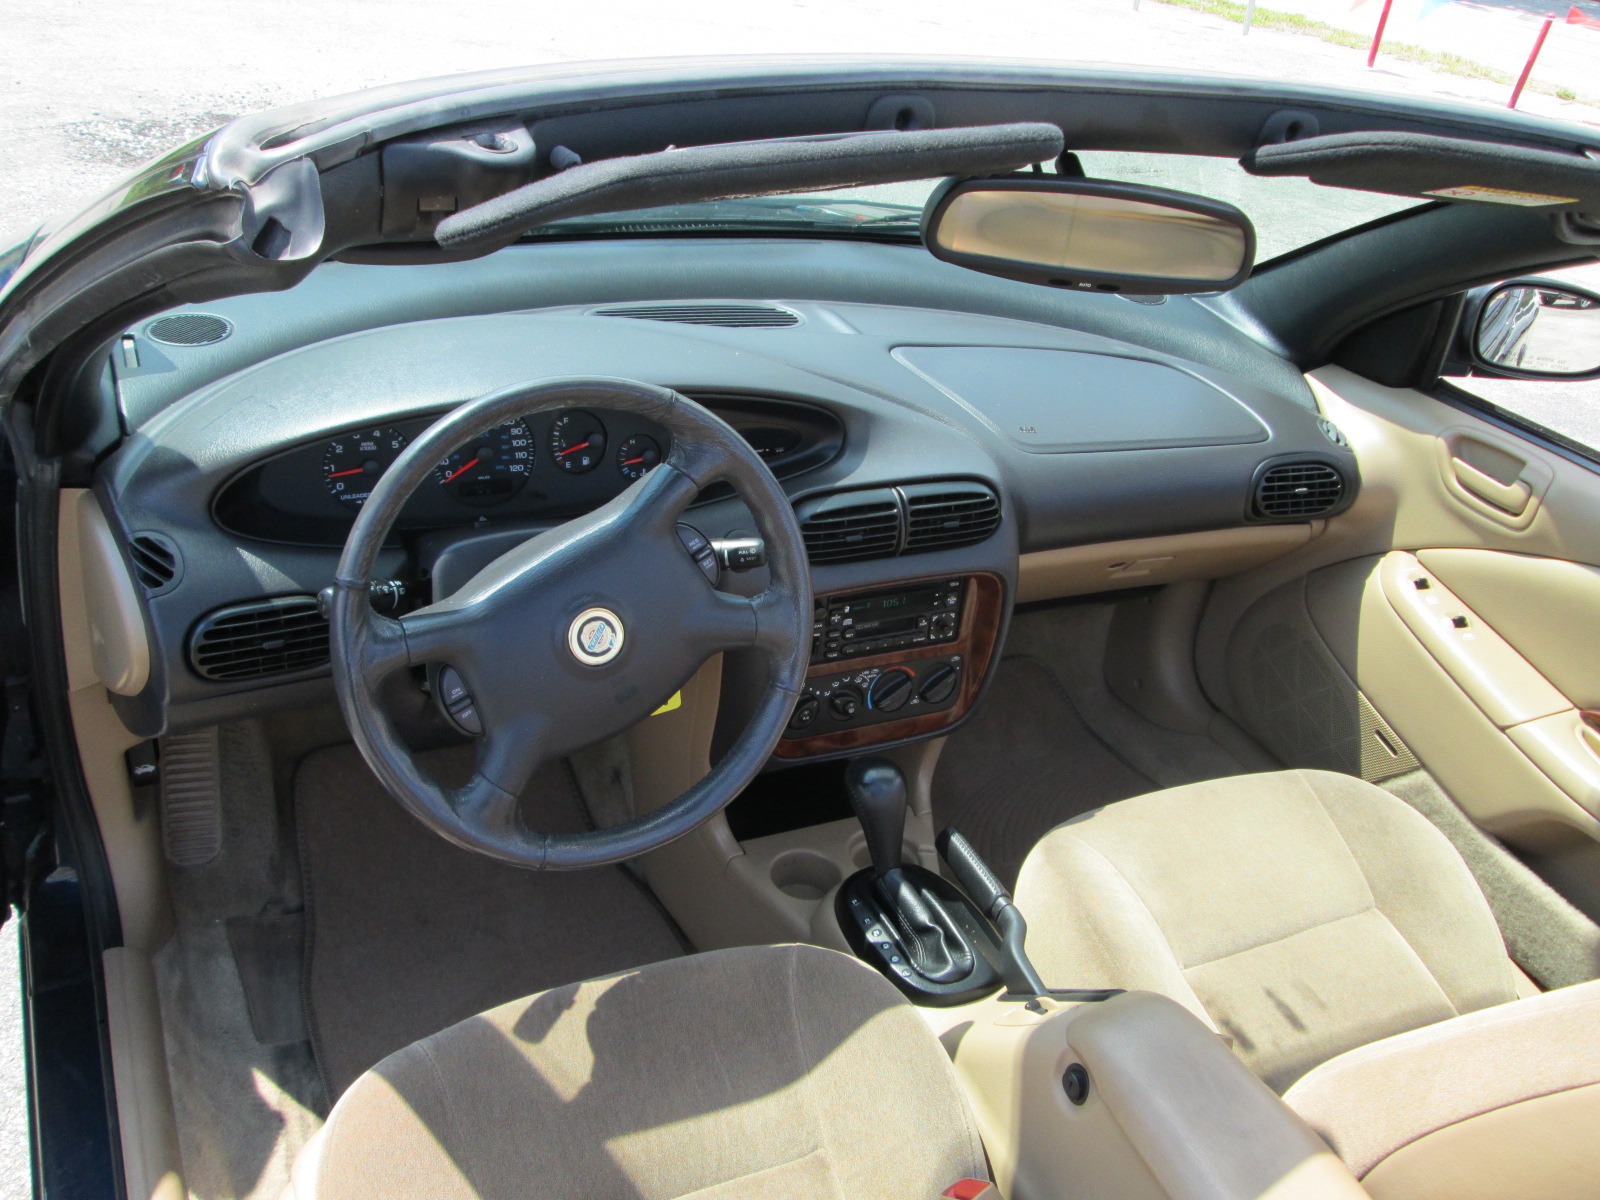 2000 Chrysler sebring convertible grill #2